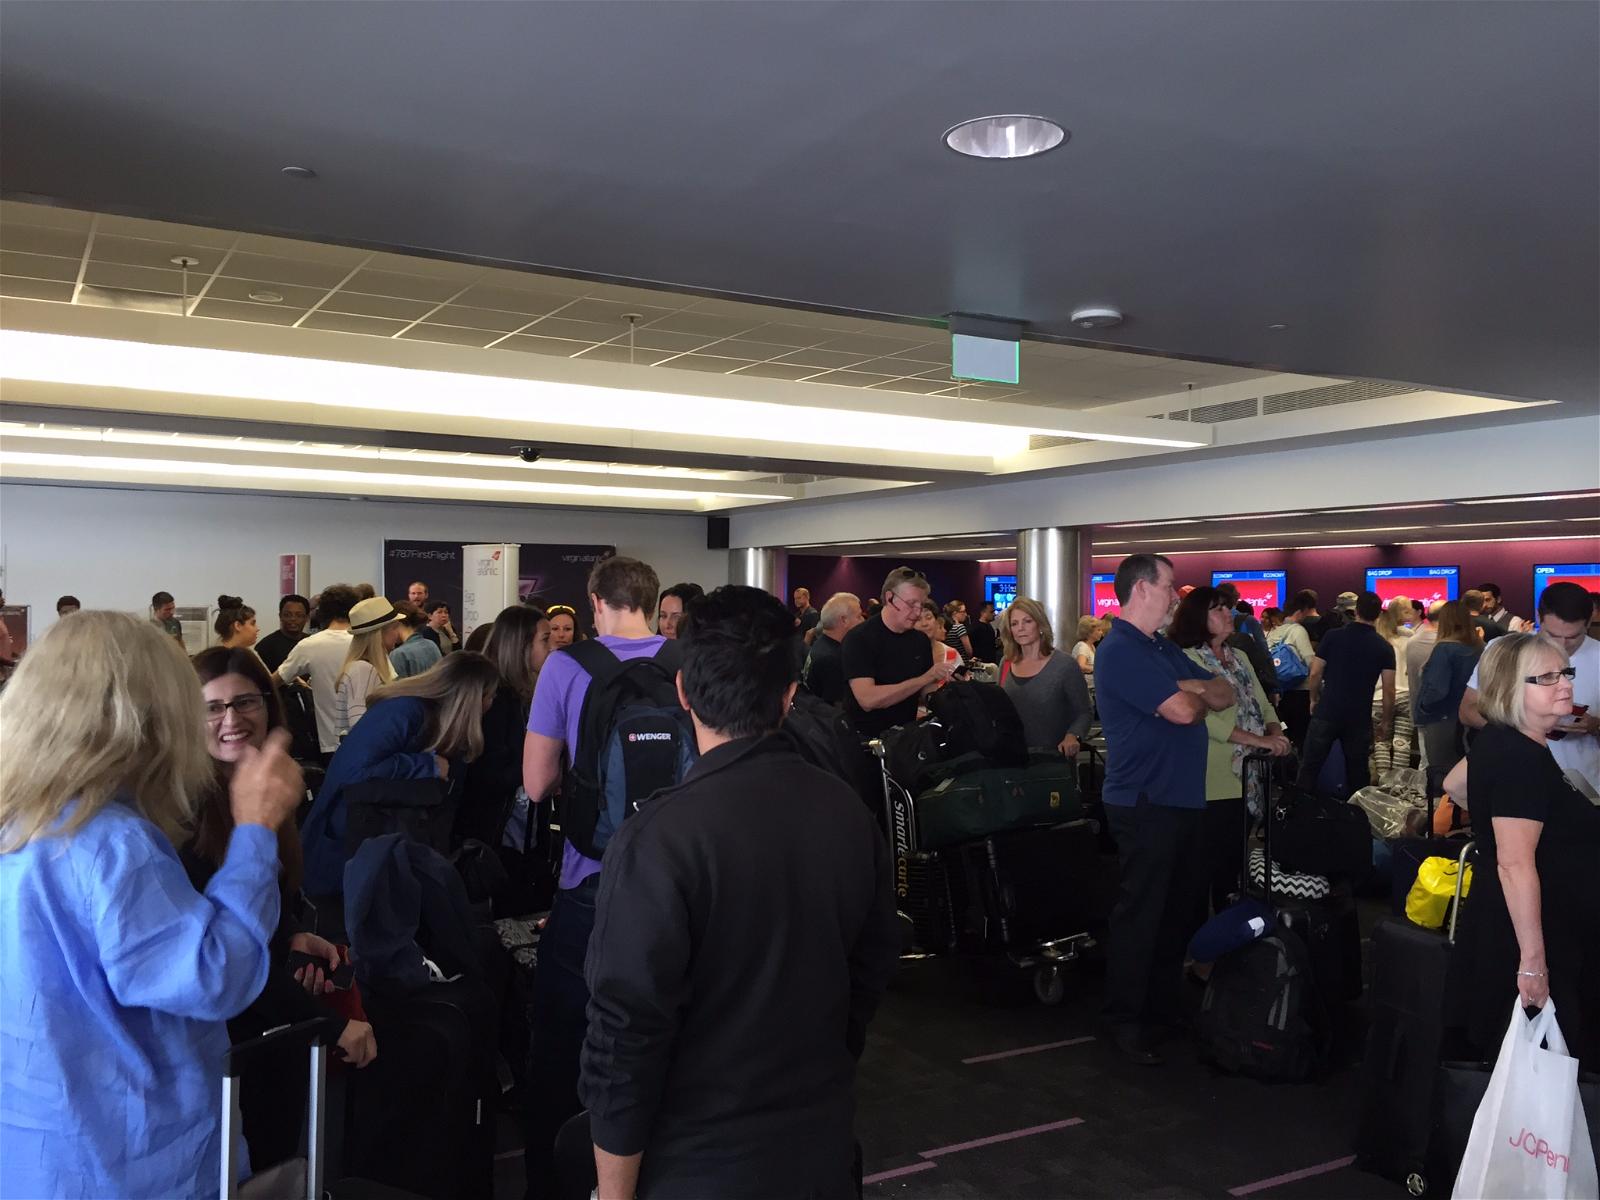 Massive crowds at Virgin Atlantic check-in area